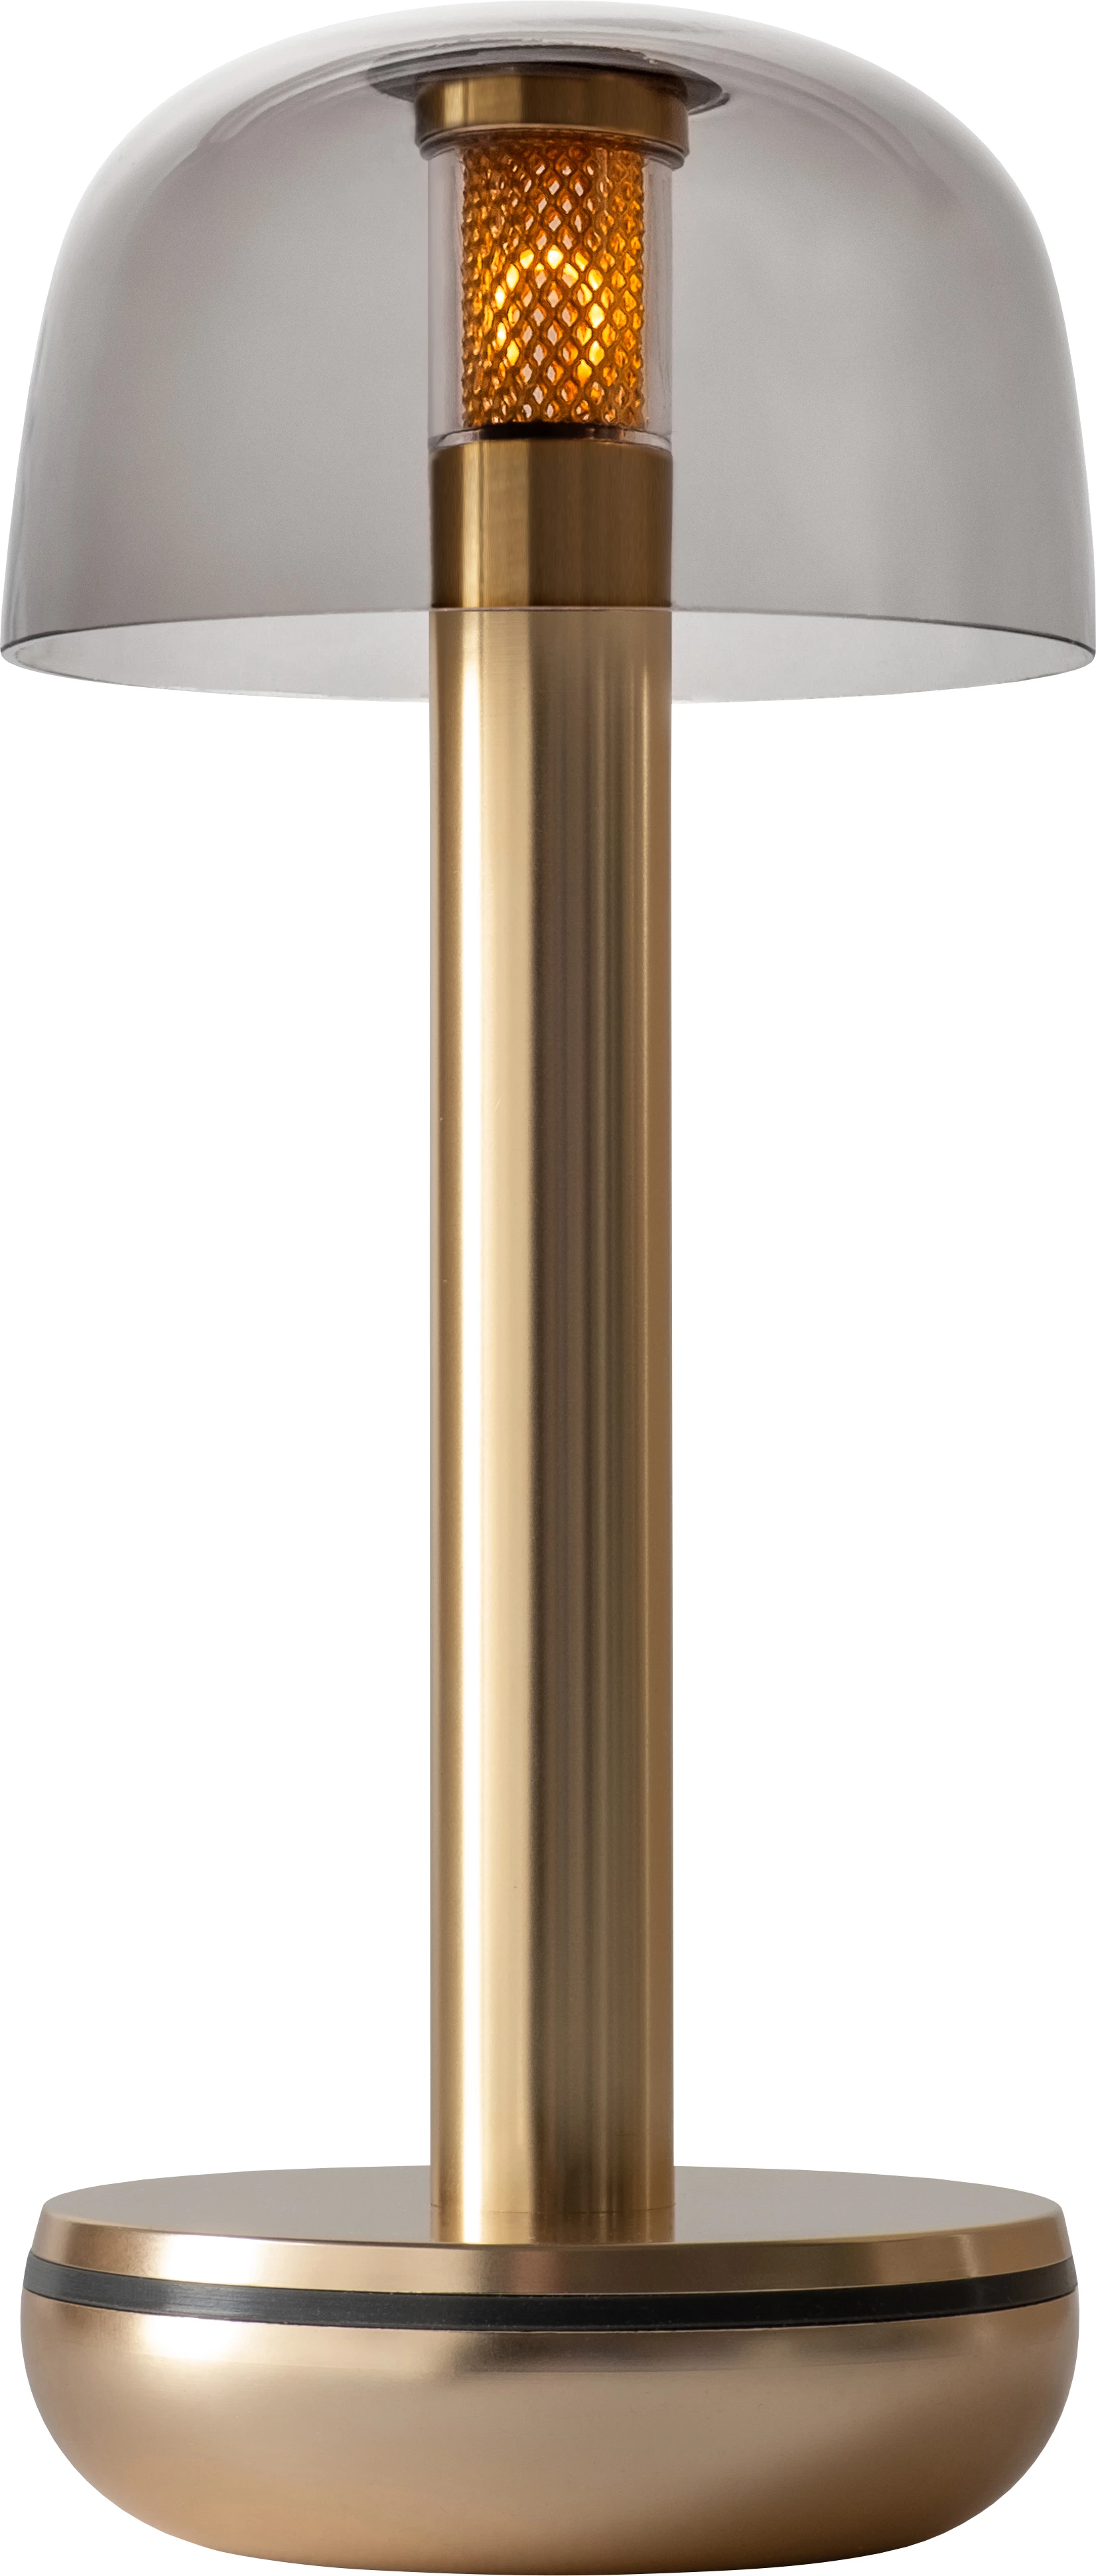 Humble One lampe, guld/røgfarvet, H21,2 cm